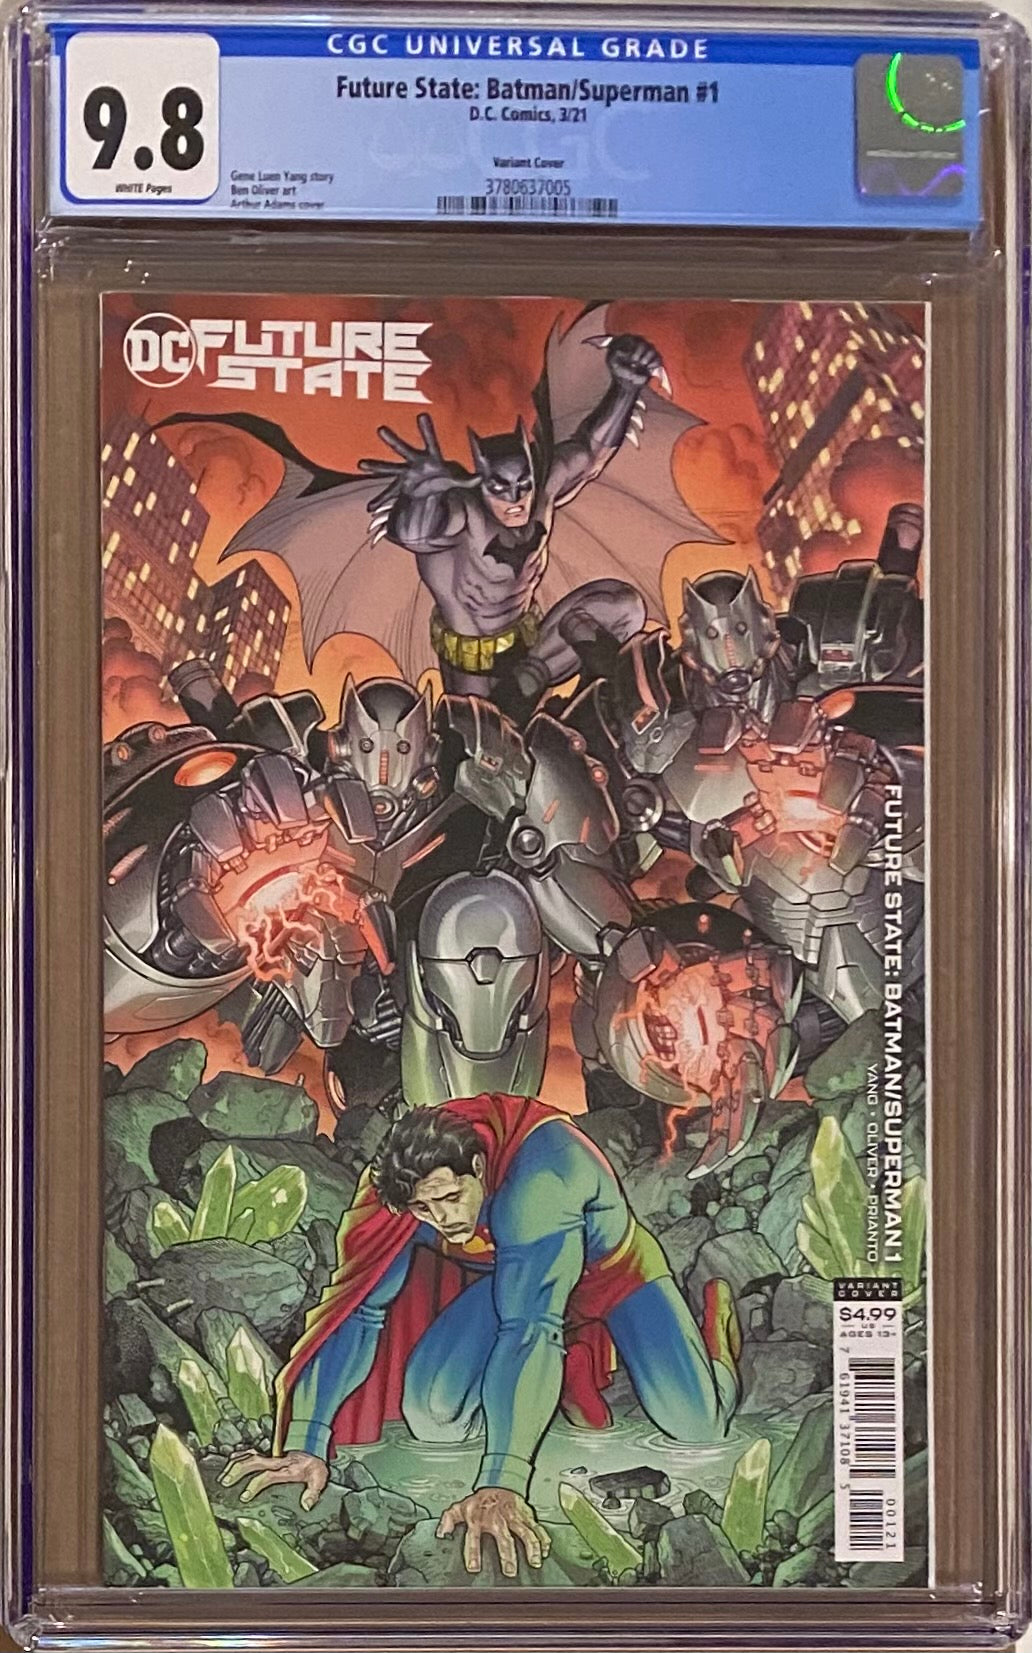 Future State: Batman/Superman #1 Variant CGC 9.8